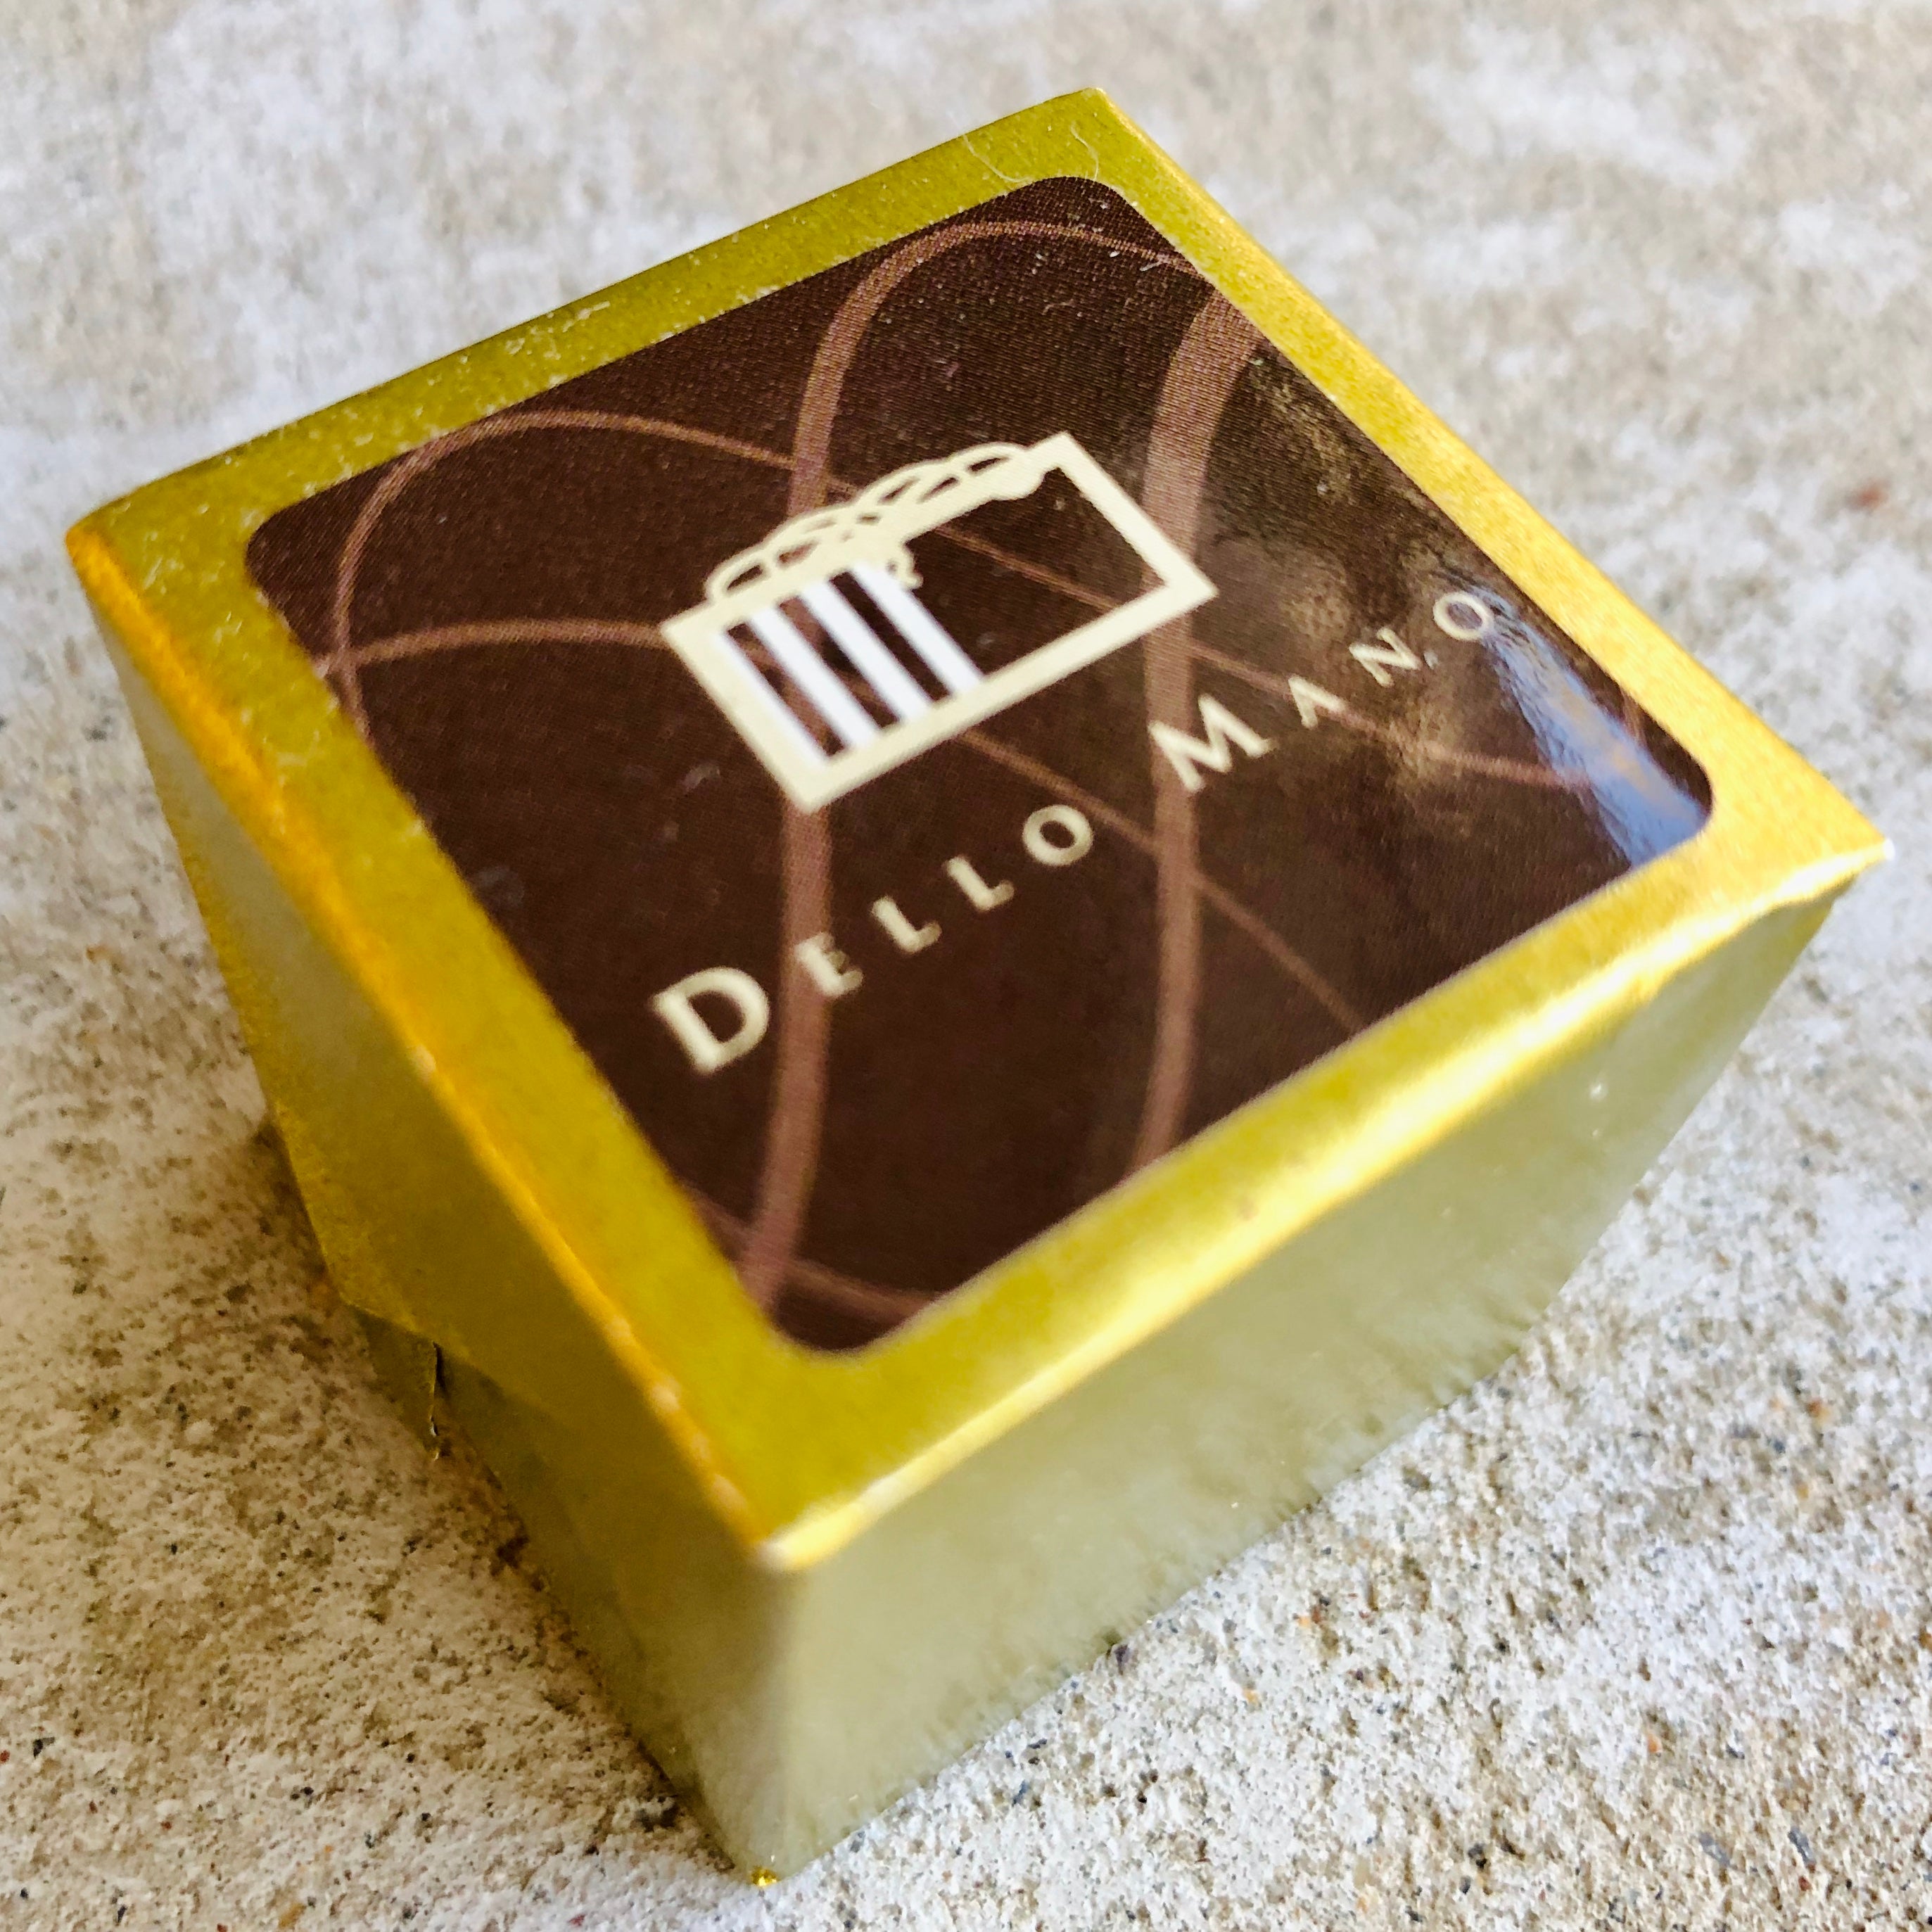 The Dello Mano Classic Brownie in characteristic gold foil and brown branding sticker